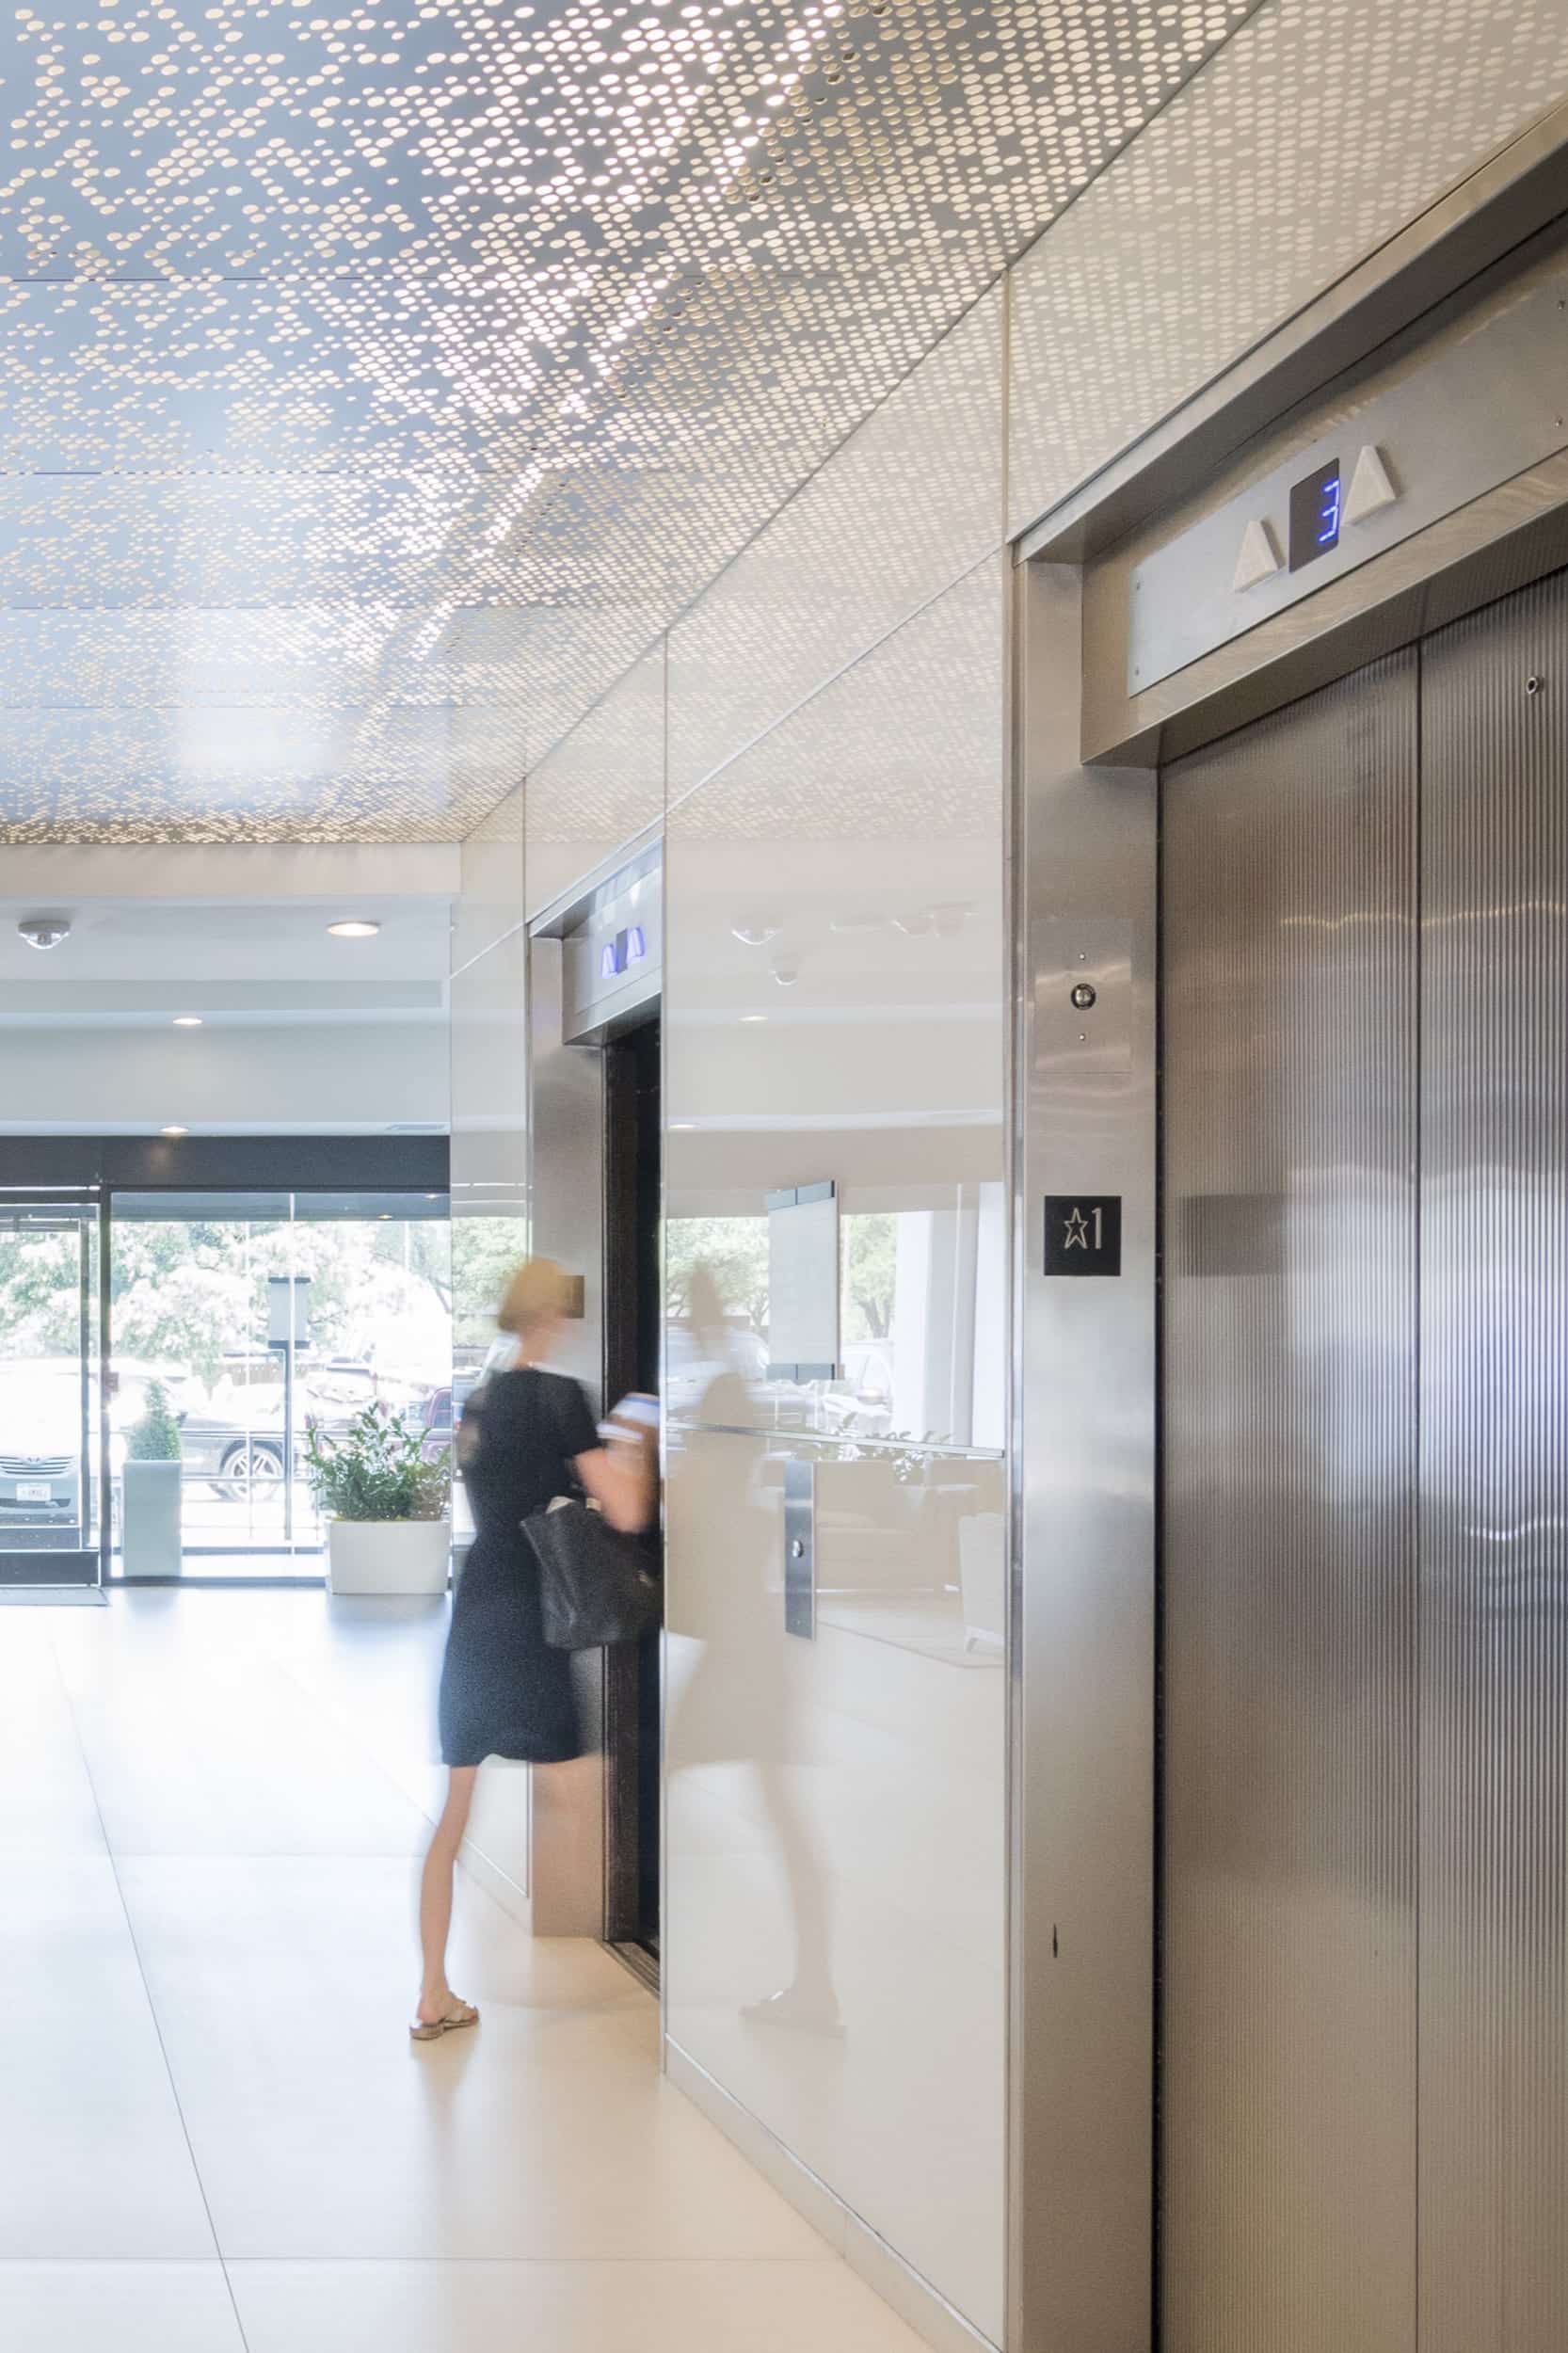 Woman enters an elevator below an ImageWall ceiling.